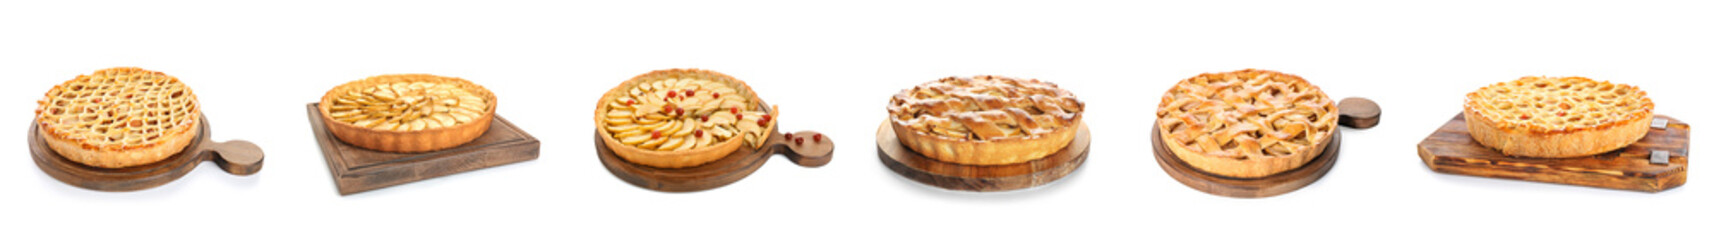 Fototapety  Set of tasty apple pies on white background